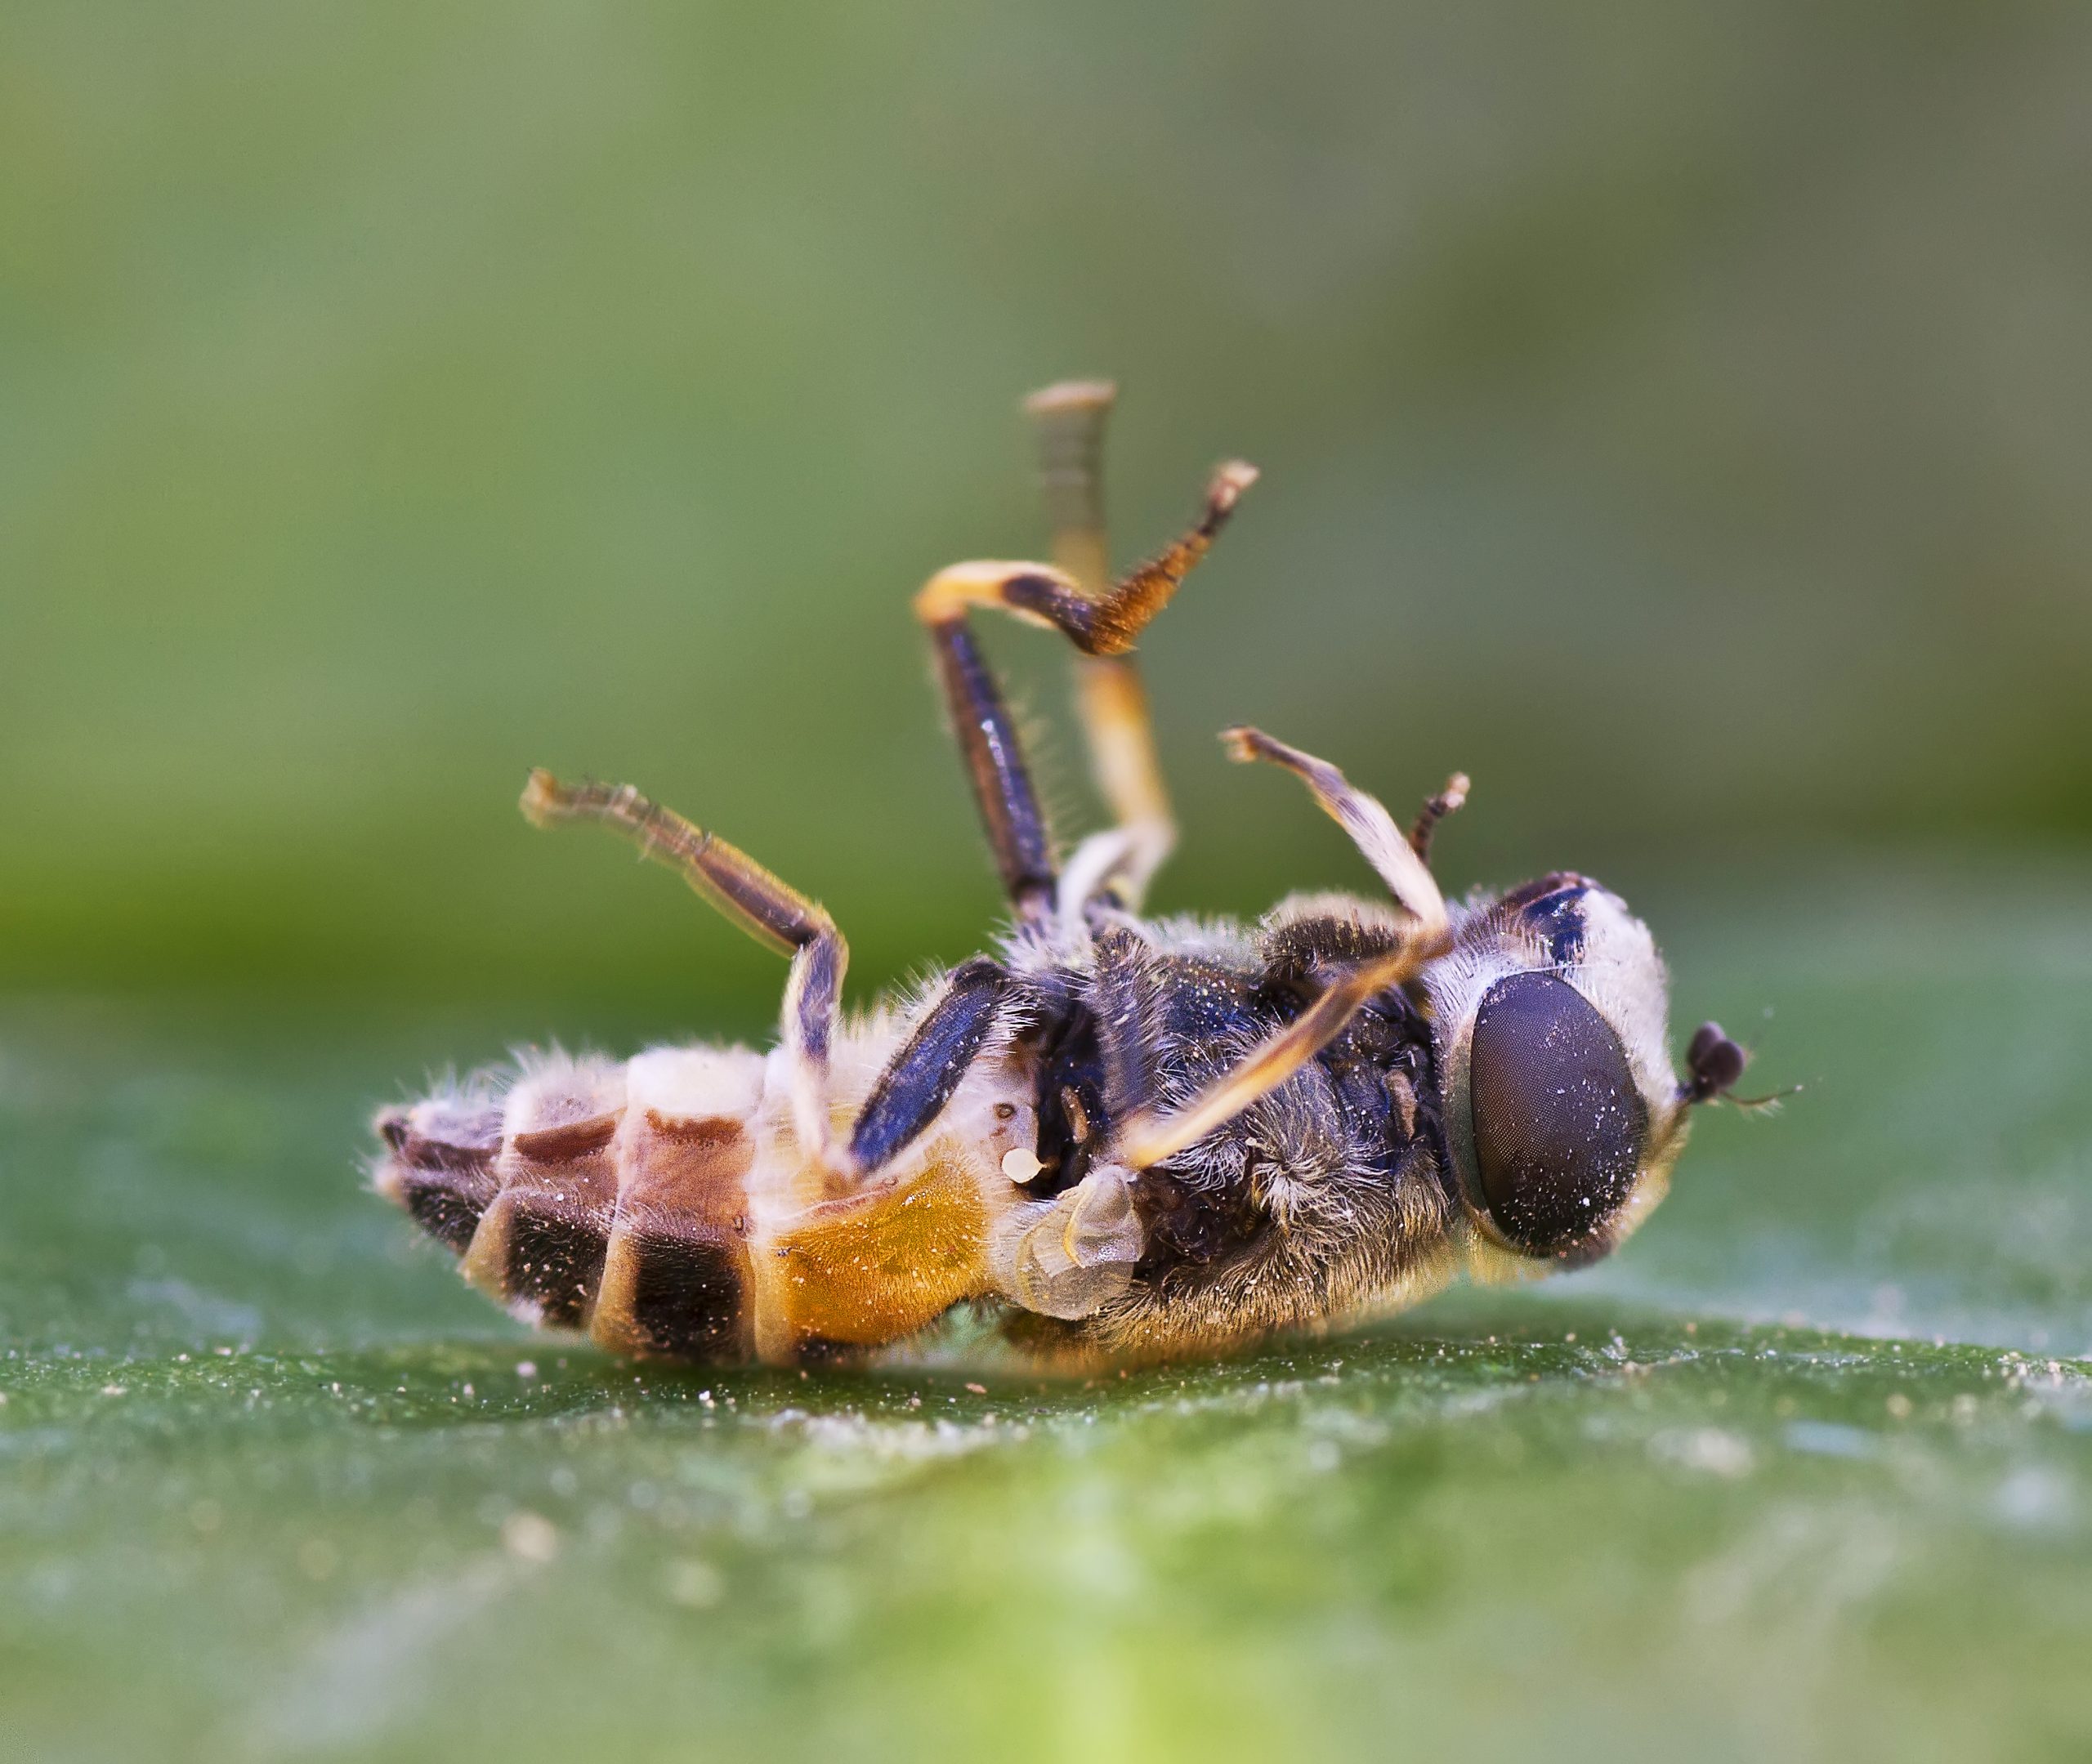 BREAKING: EPA Confirms Pesticides Killing Honeybees